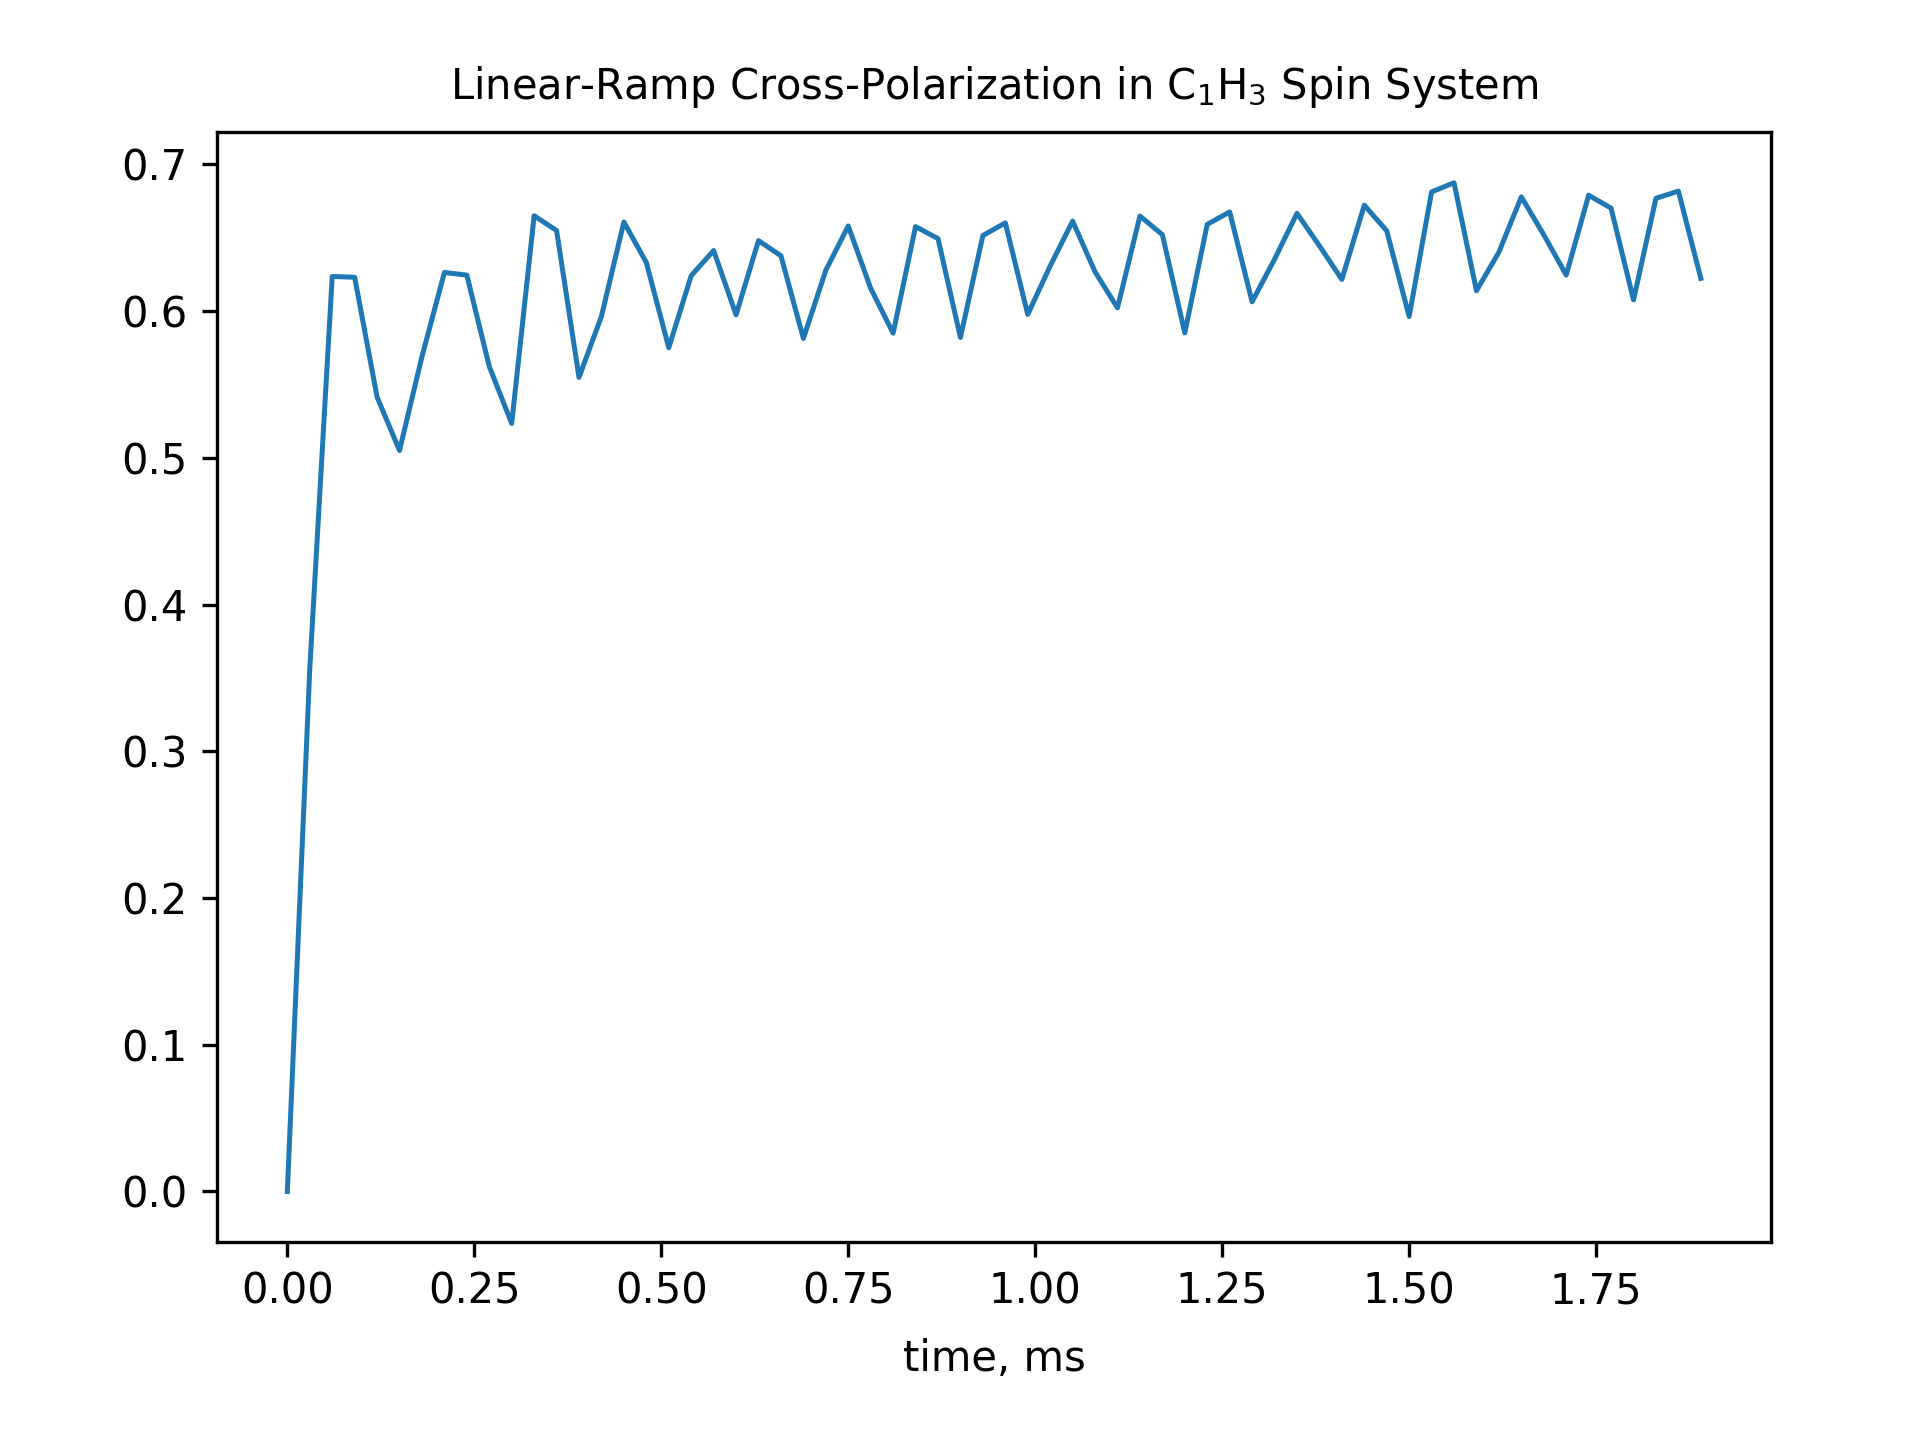 Linear-Ramp Cross-Polarization simulation